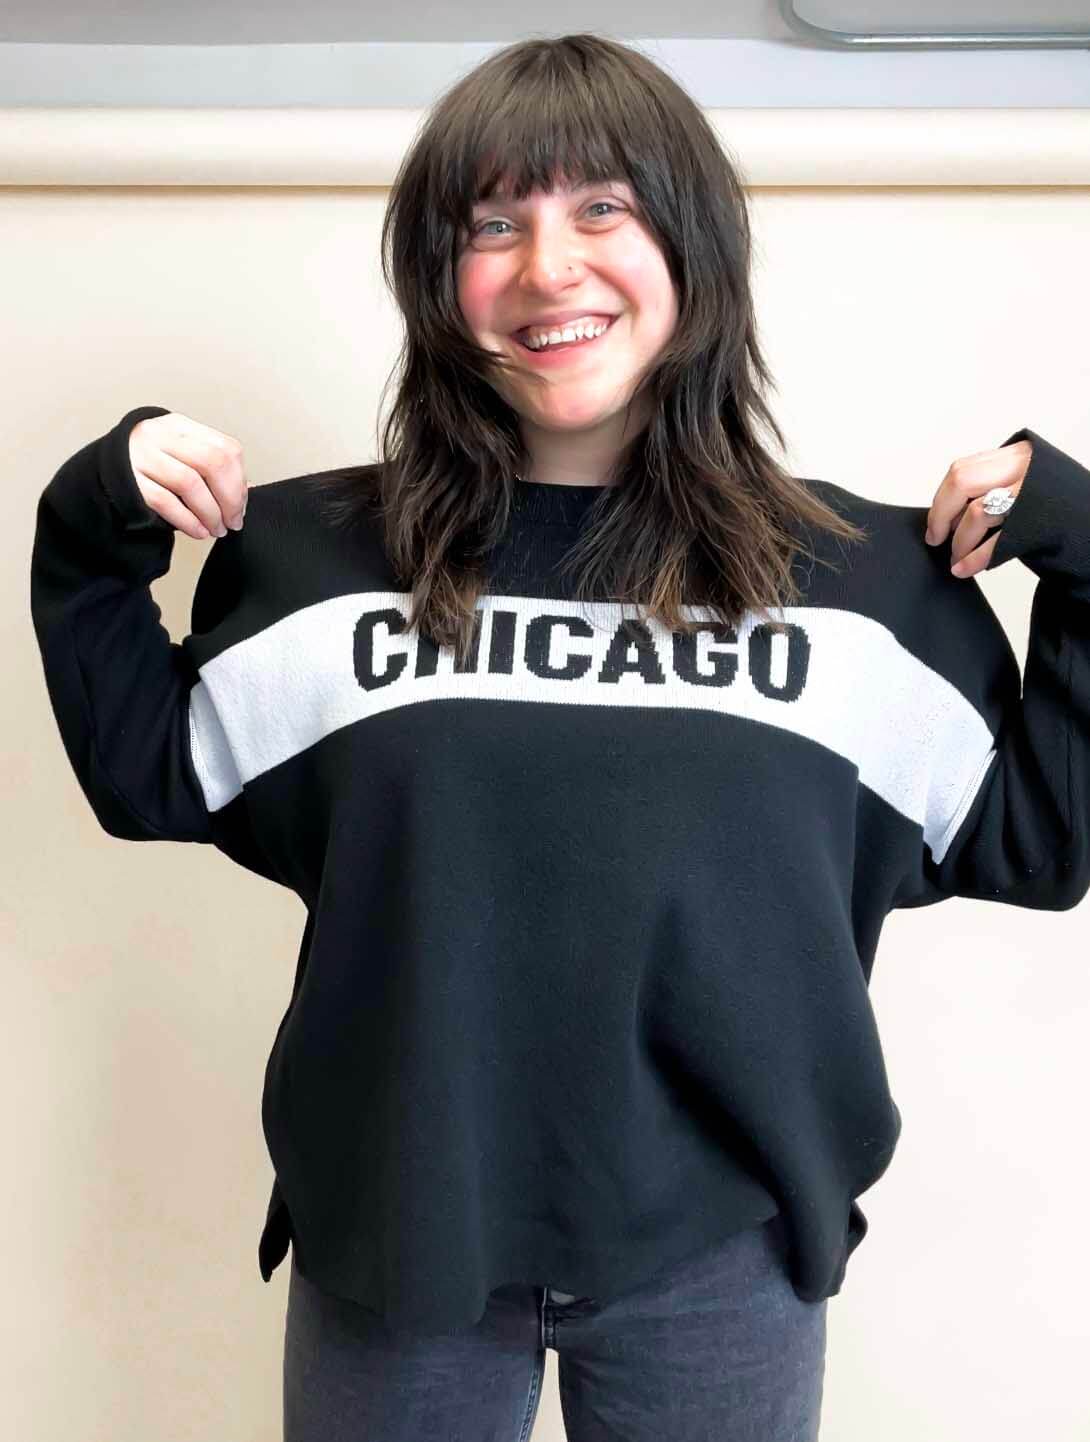 "Chicago" Stripe Sweater in Black/White